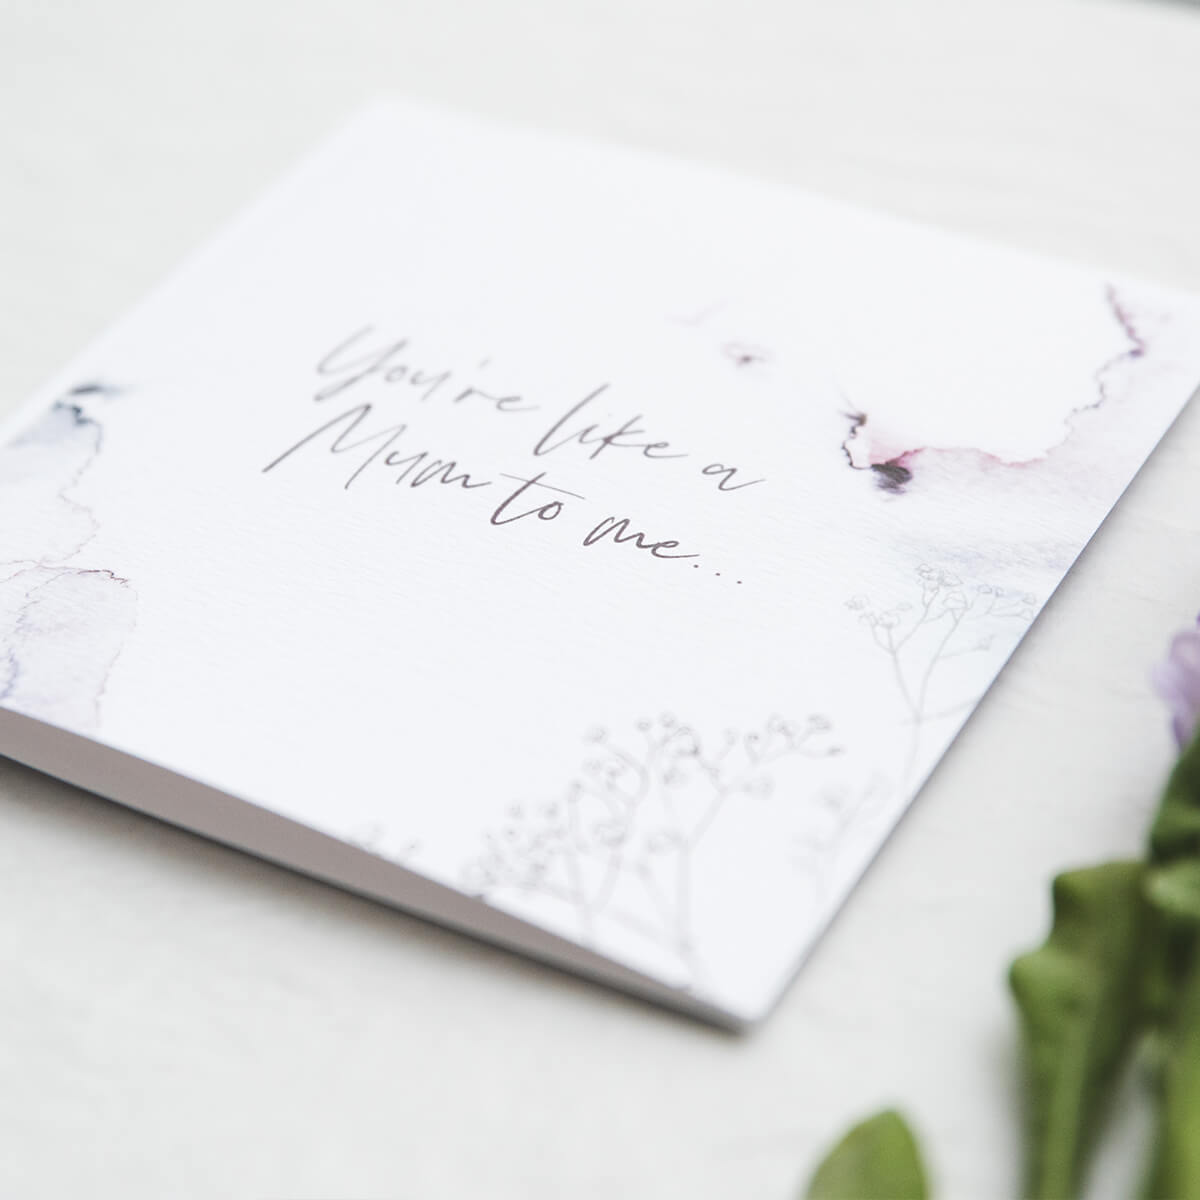 'You're Like A Mum To Me' Mum Card - I am Nat Ltd - Greeting Card